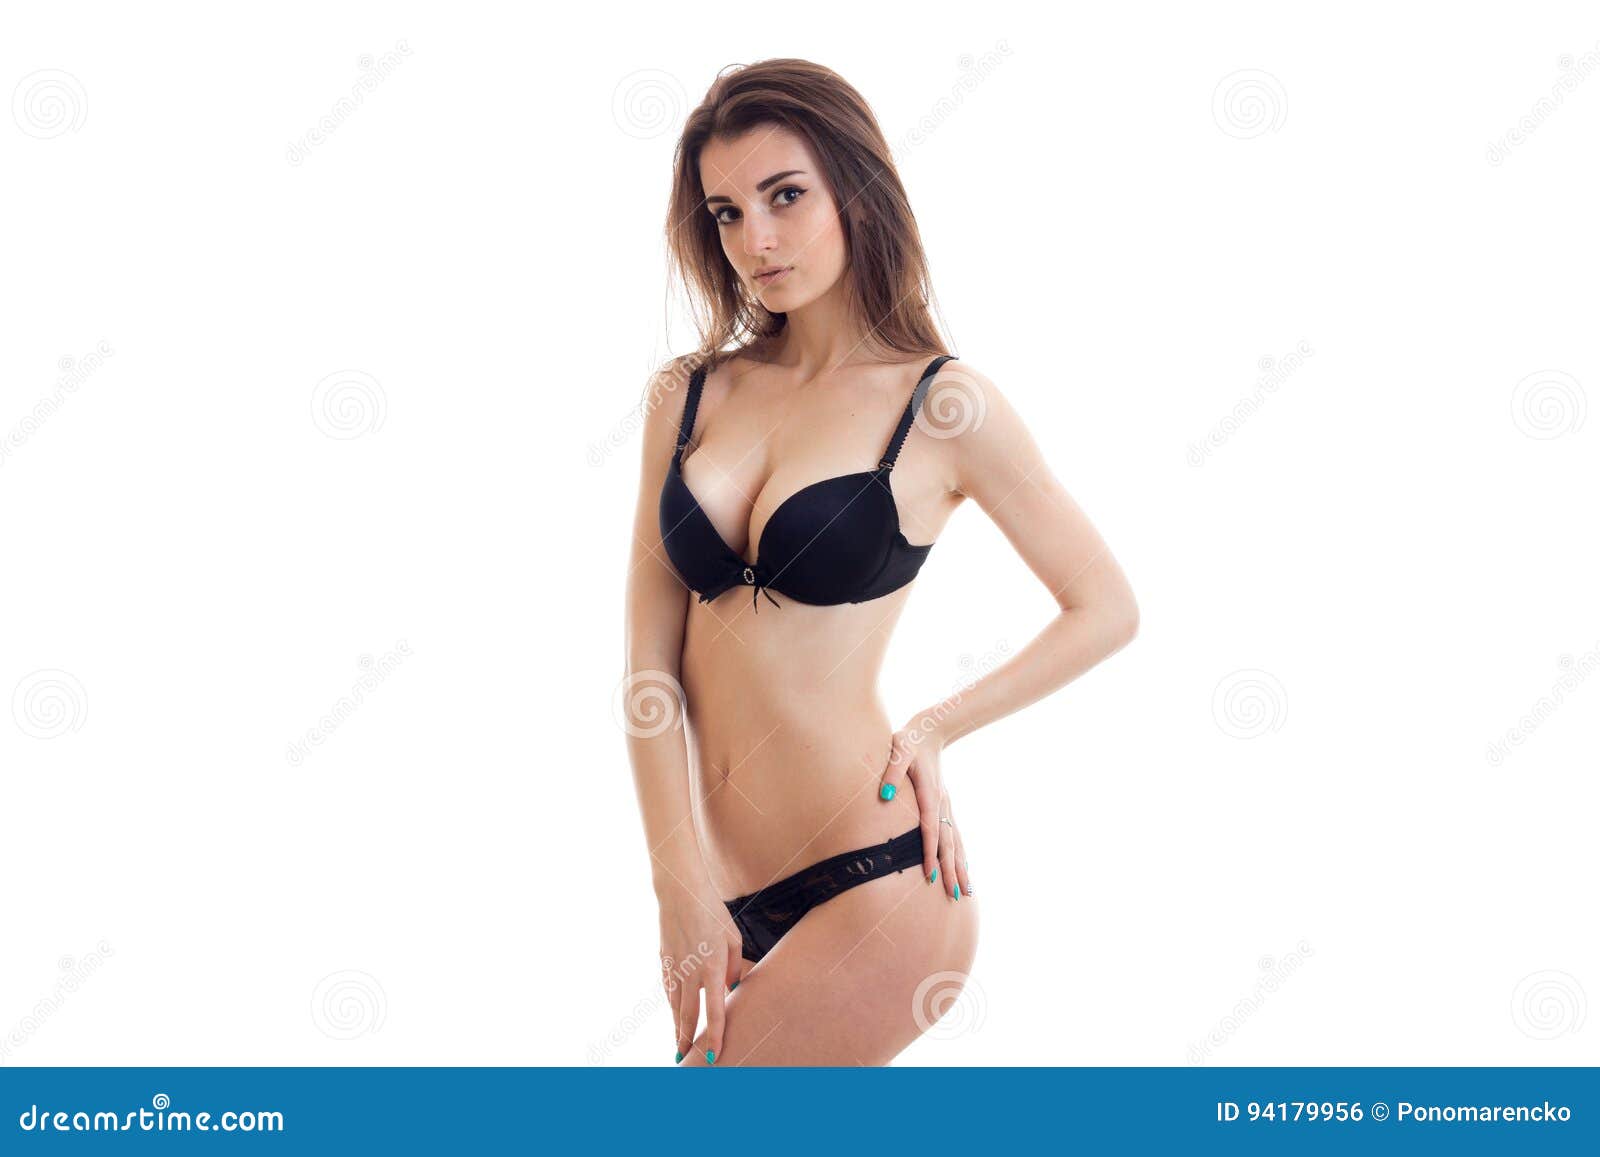 alice crozier share skinny woman big tits photos